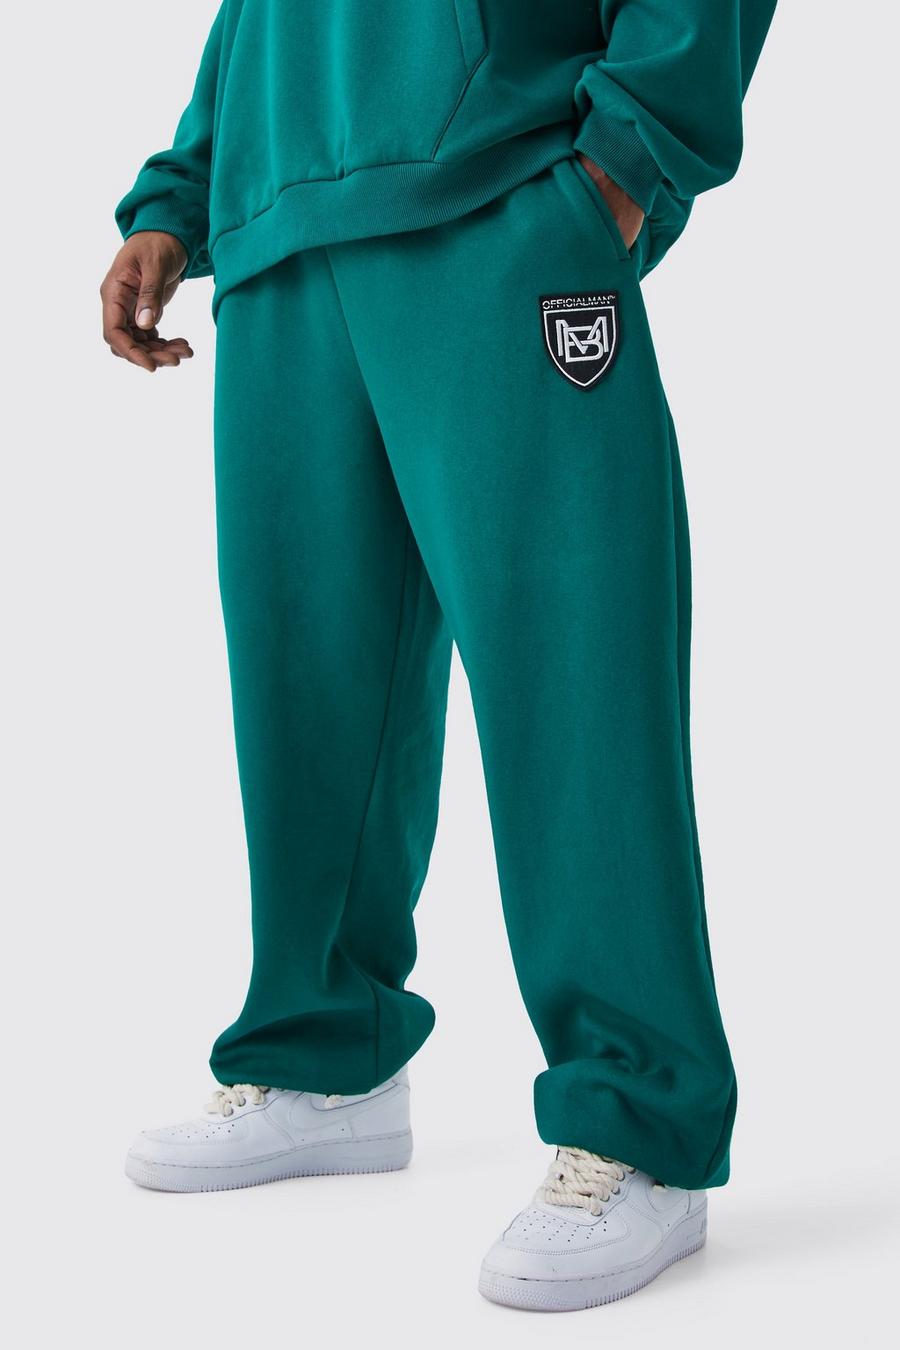 Pantalón deportivo Plus oversize de fútbol Worldwide, Green